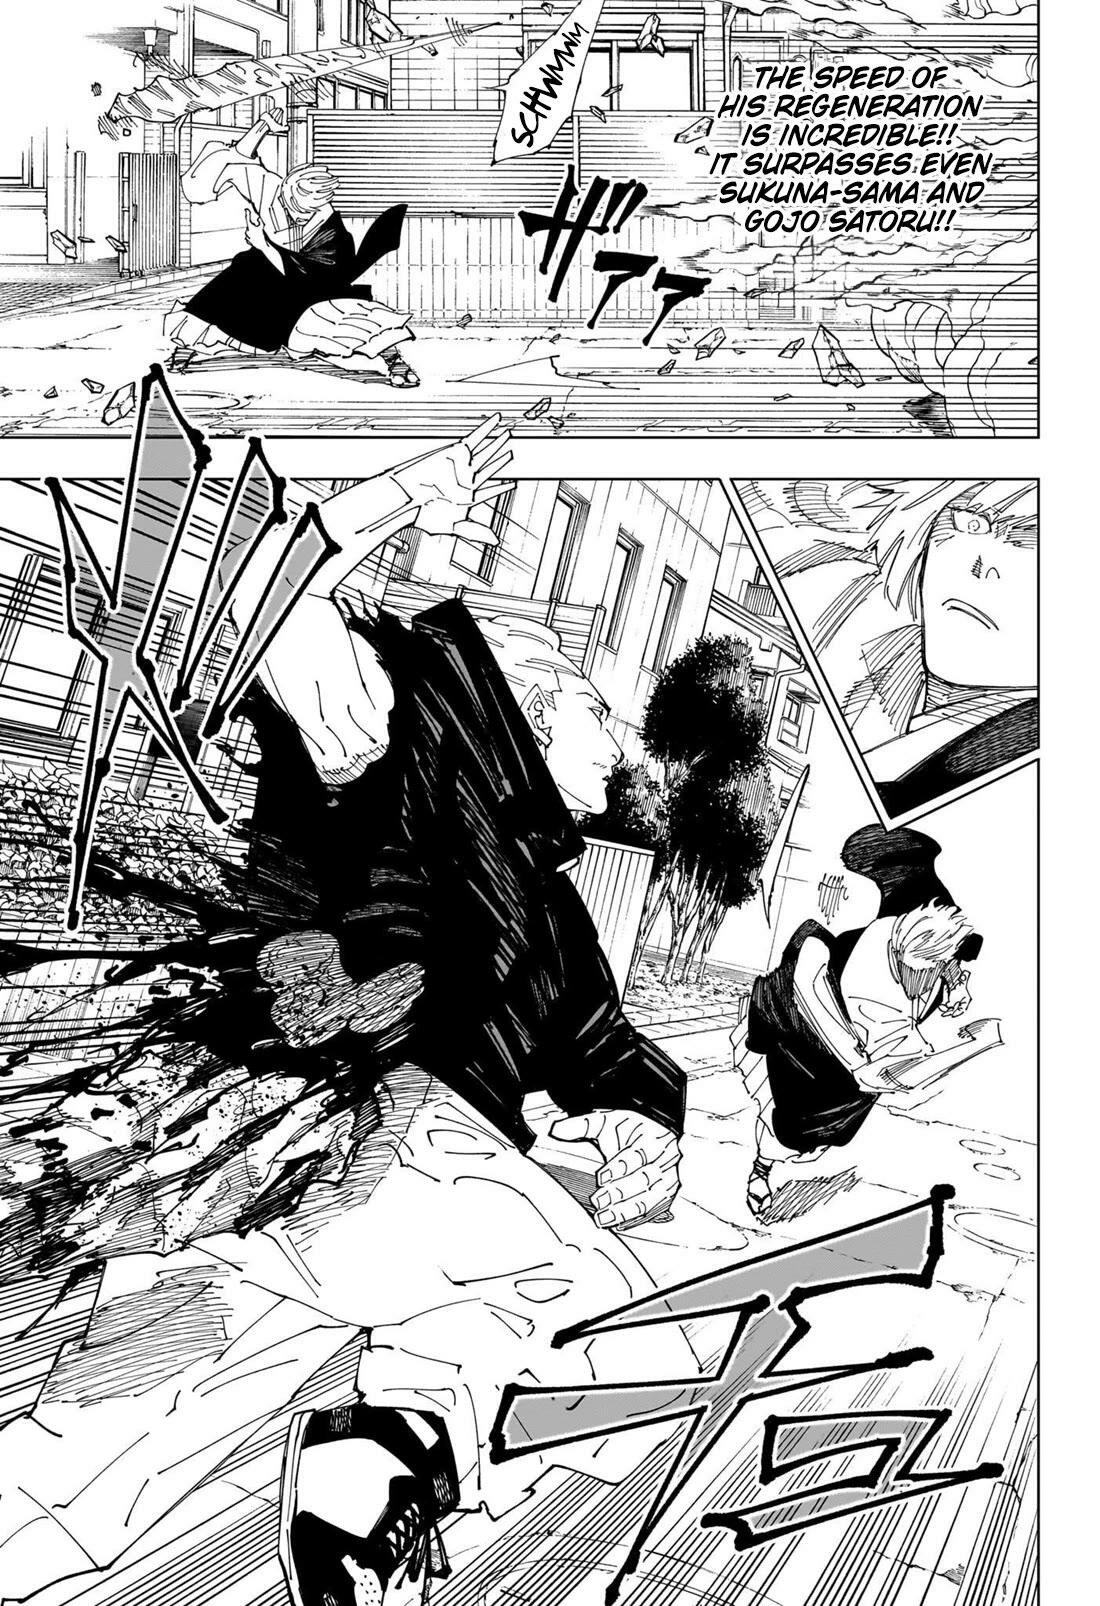 Jujutsu Kaisen Chapter 245: Chapter 245: The Decisive Battle In The Uninhabited, Demon-Infested Shinjuku ⑰ page 6 - Mangakakalot